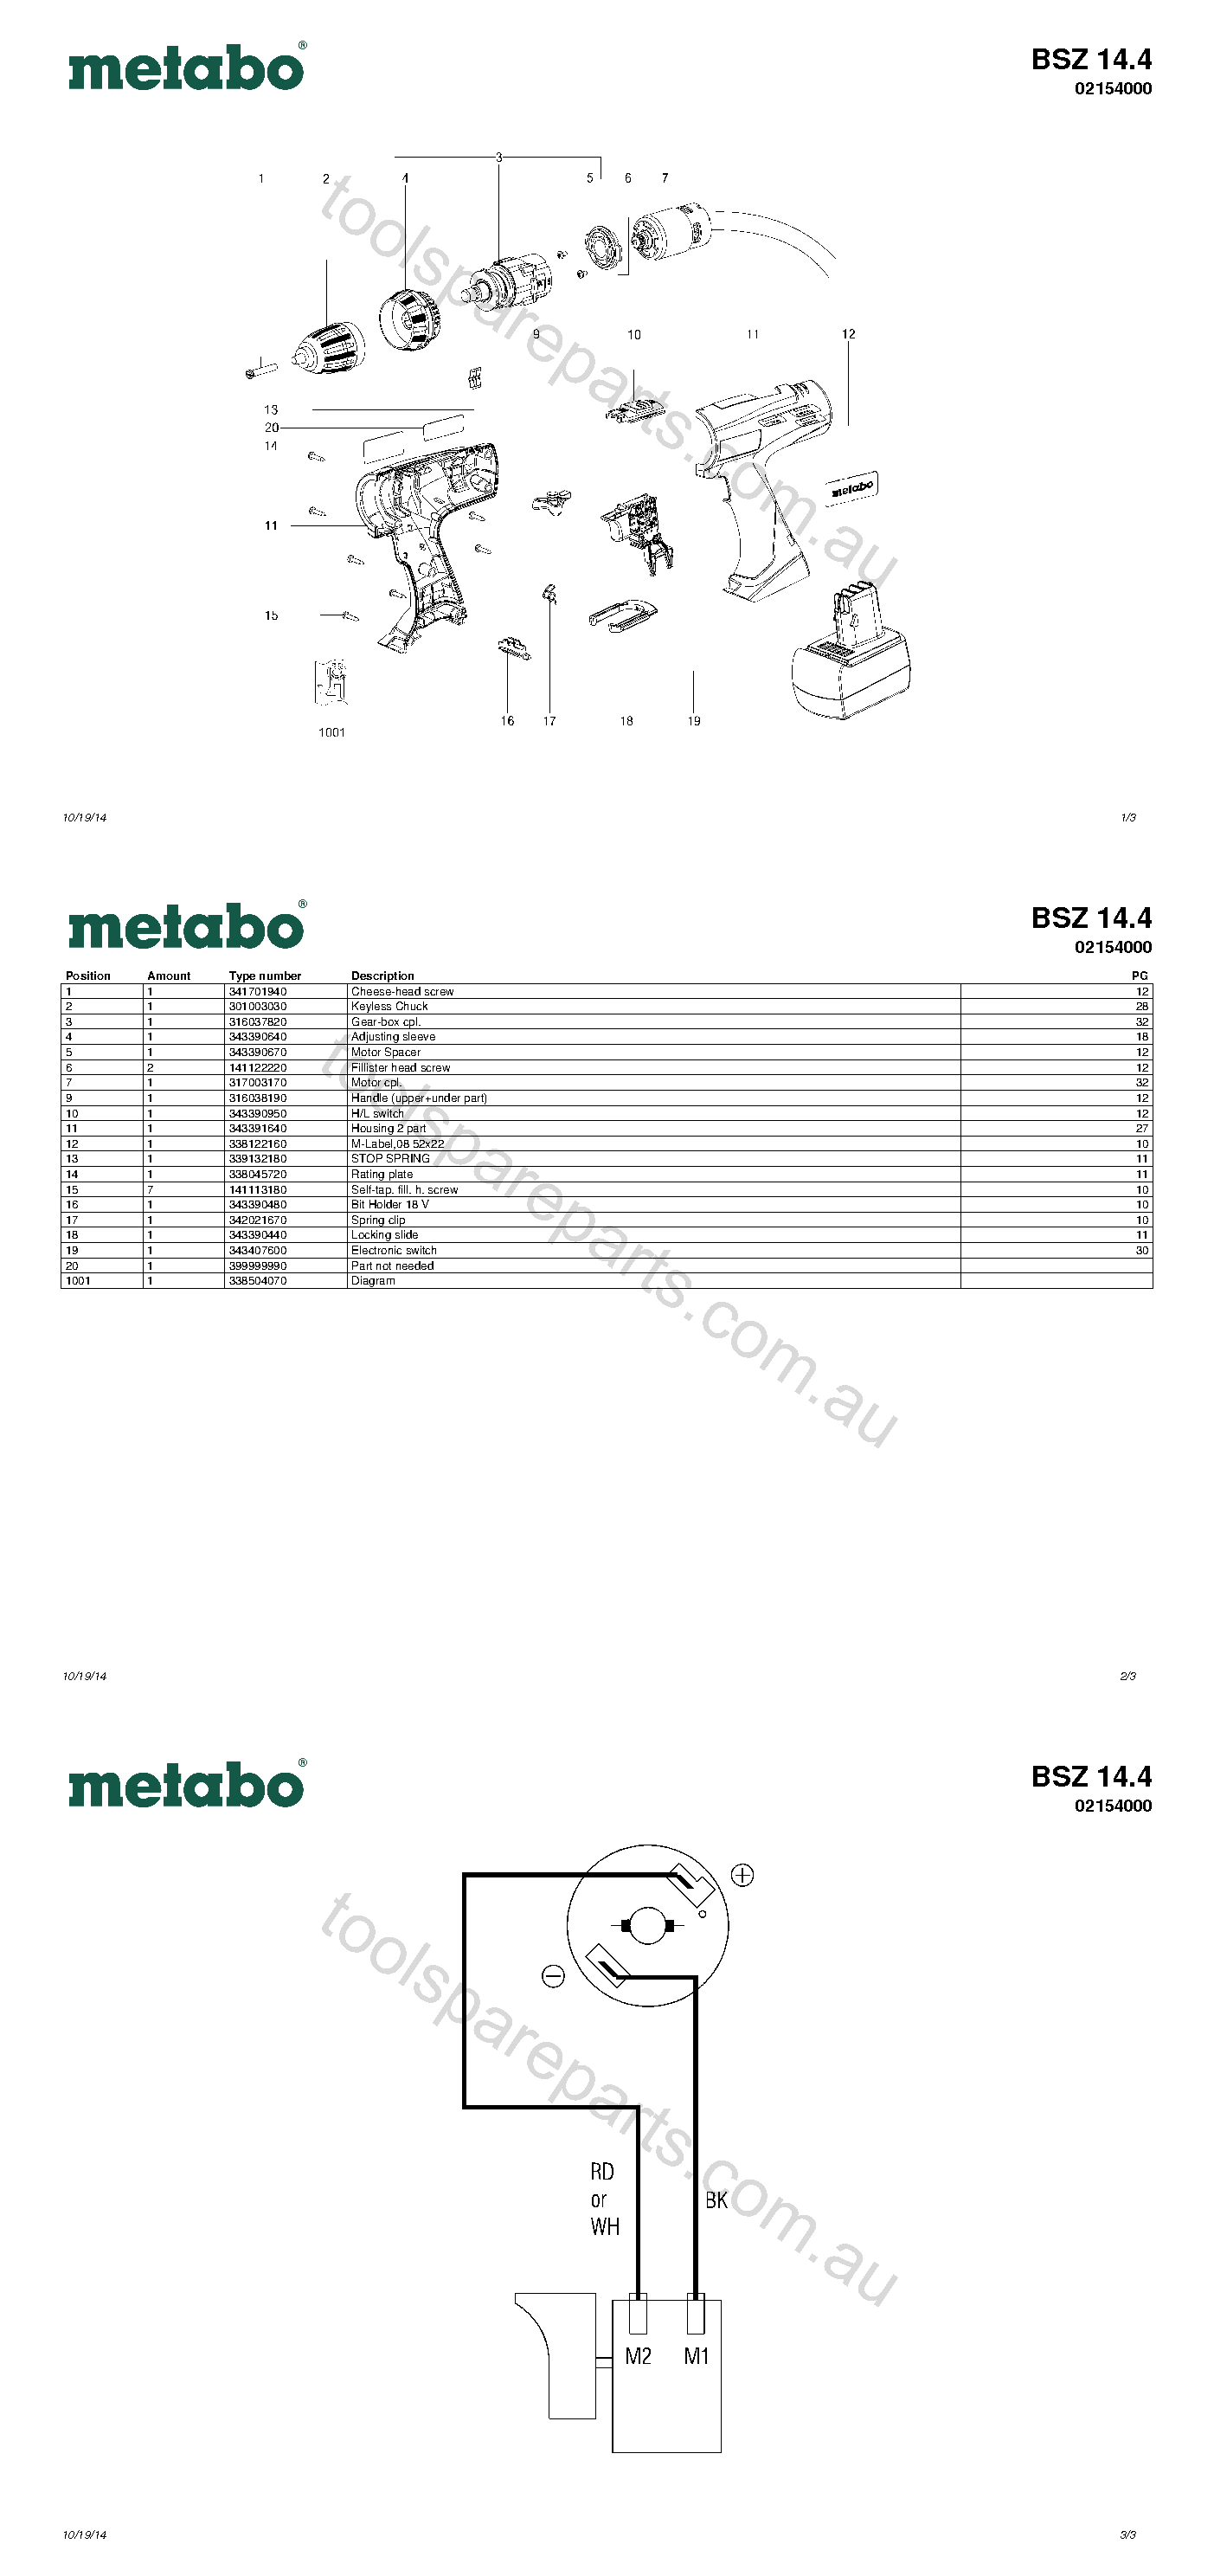 Metabo BSZ 14.4 02154000  Diagram 1